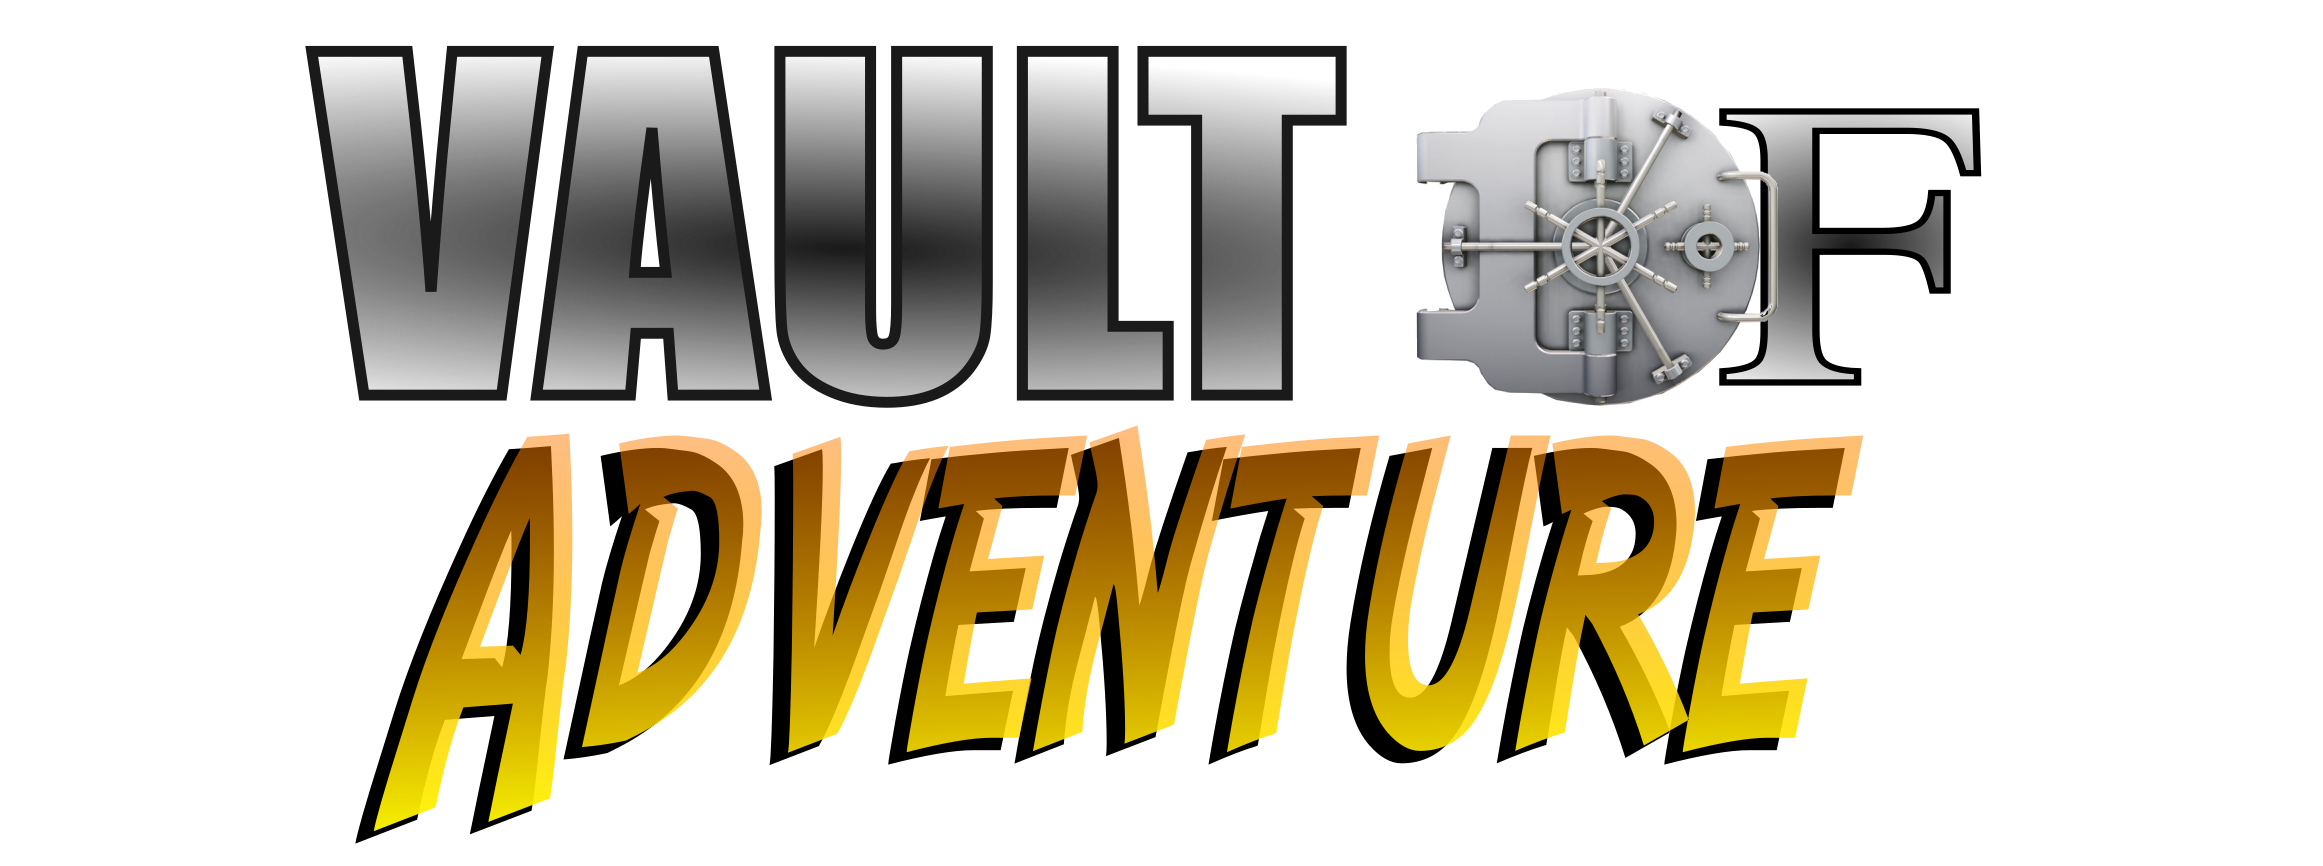 The Vault of Adventure